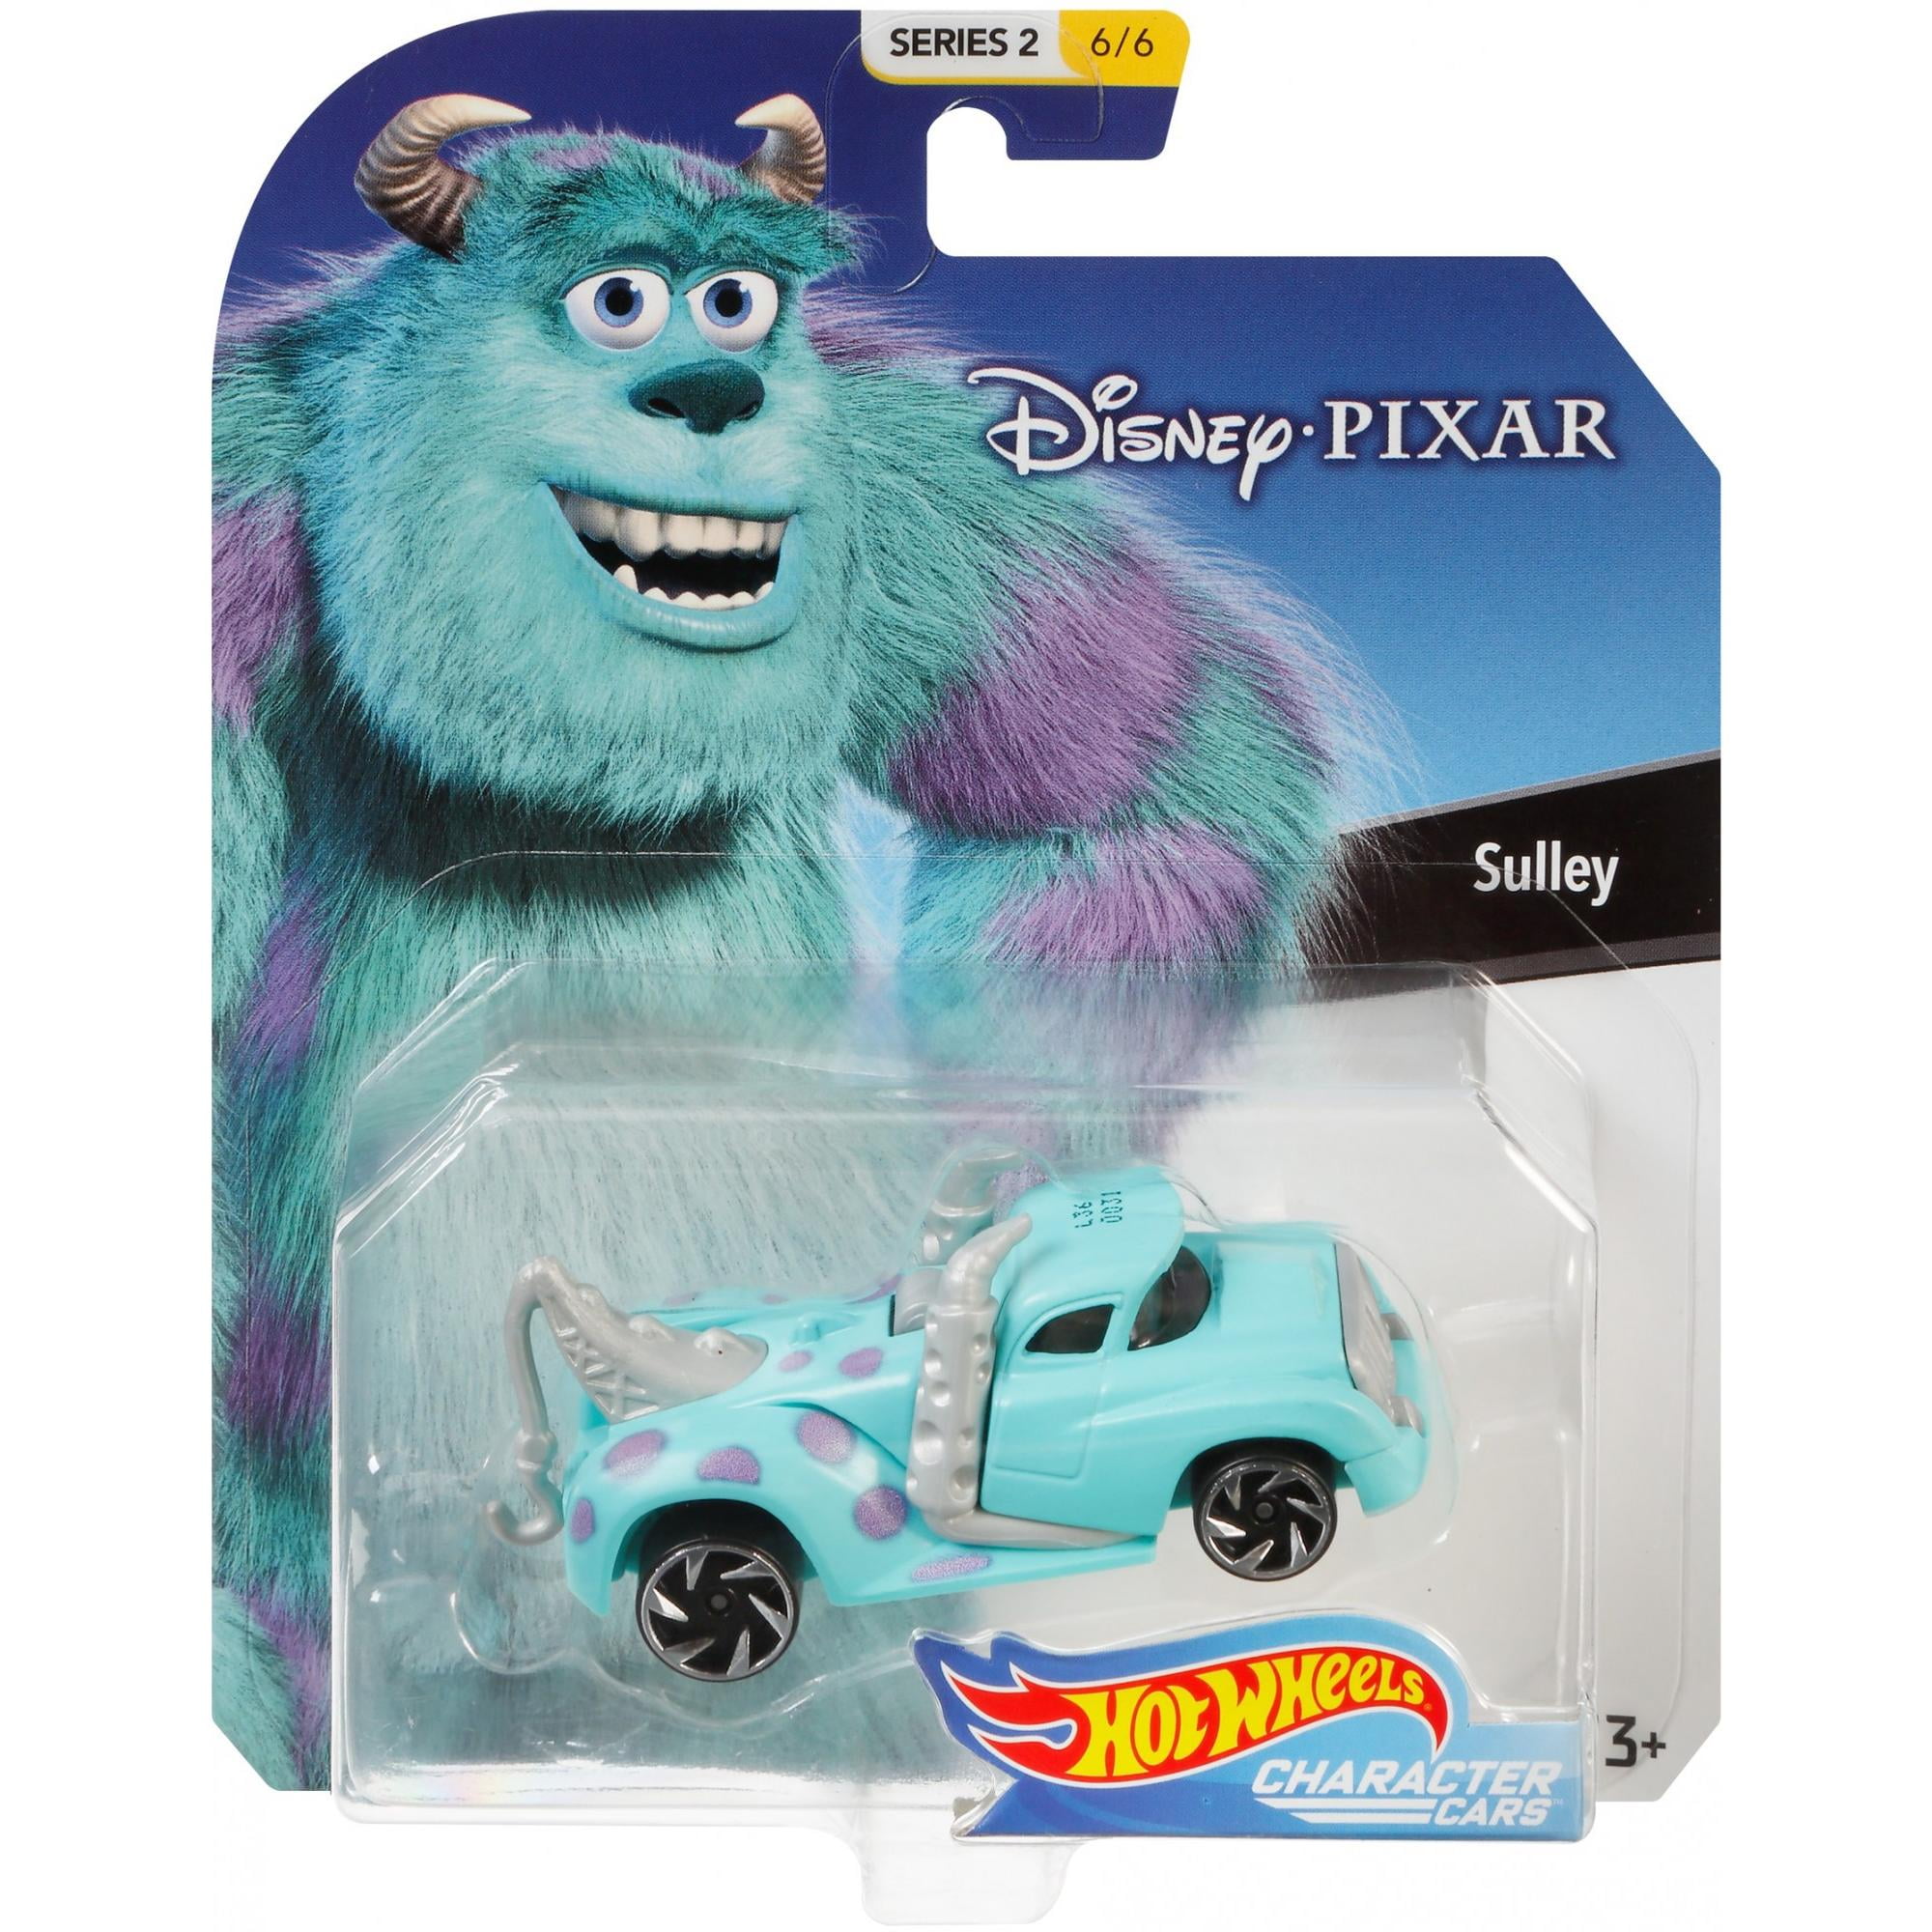 2019 Hot Wheels Disney Pixar Character Cars Series 3 MAUI #6/6